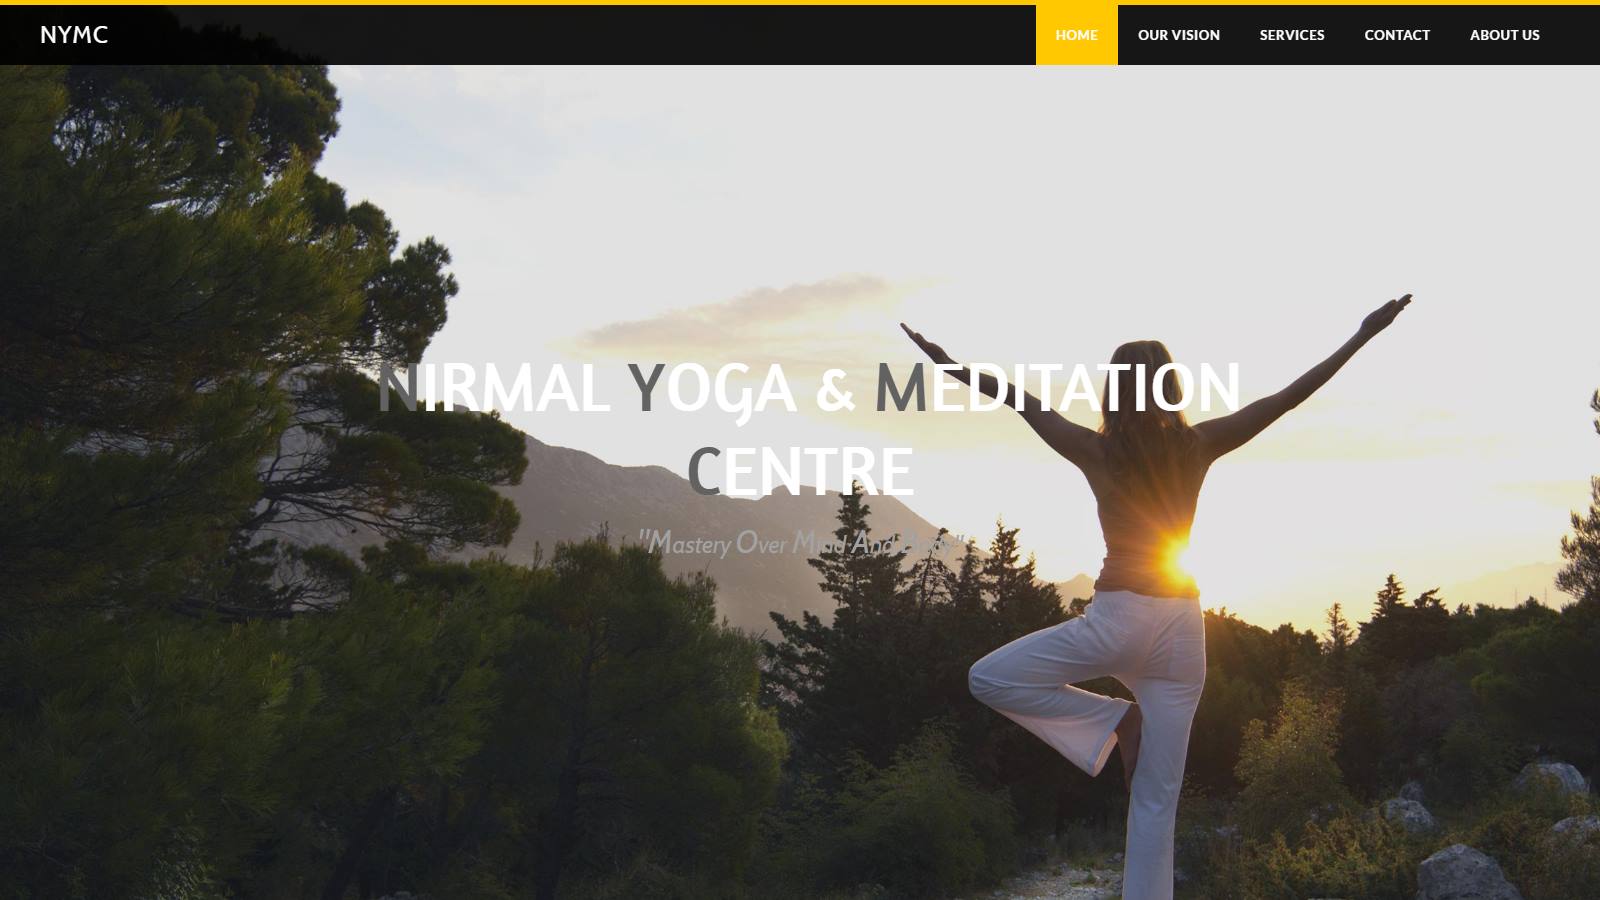 Nirmal Yoga & Meditation Center Image